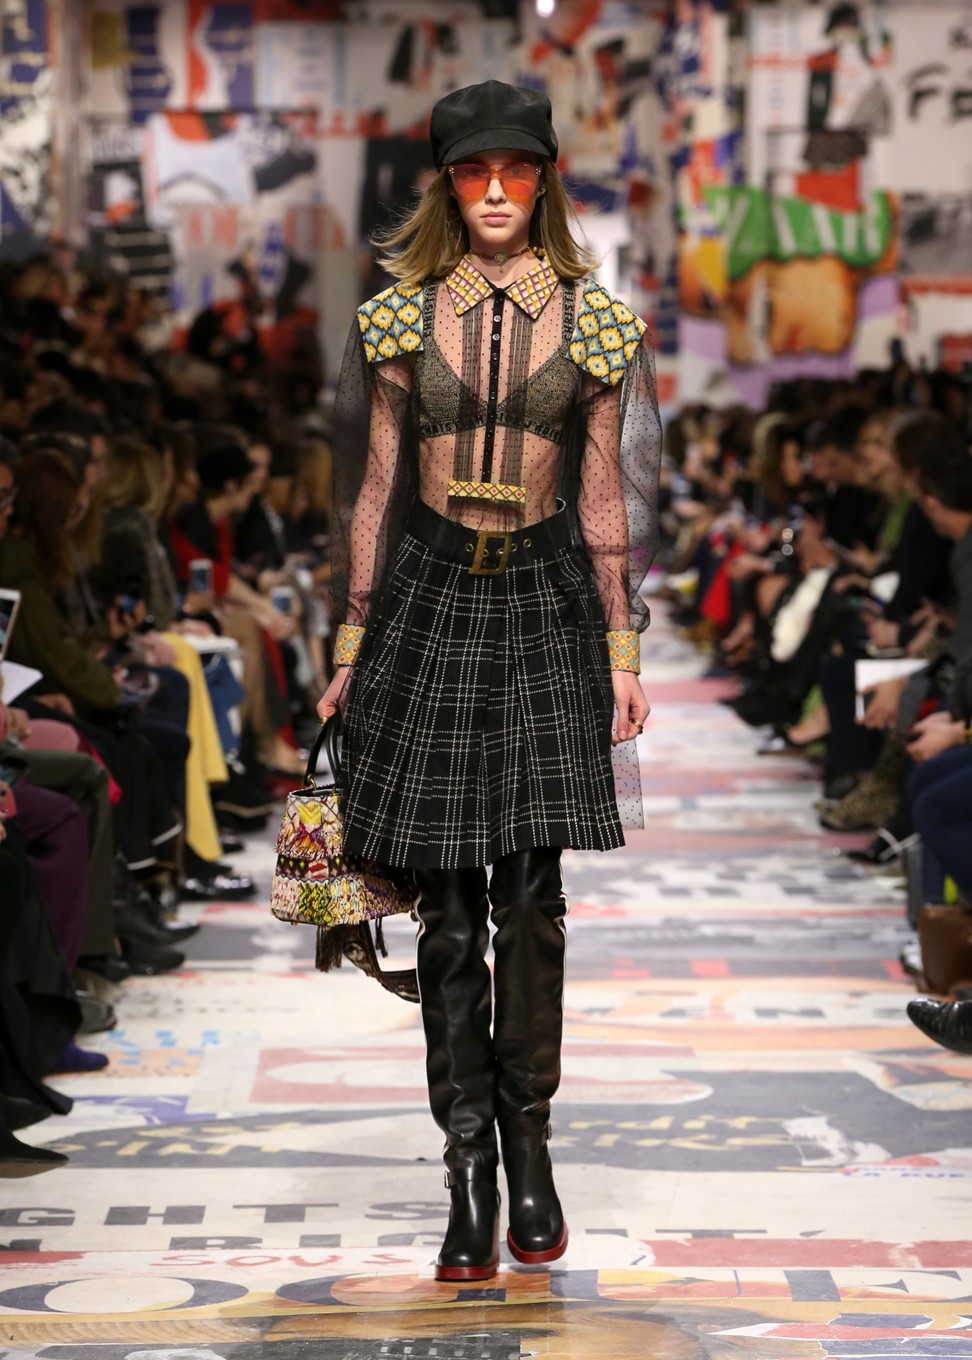 Dior celebrates women’s rights at Paris Fashion Week | South China ...